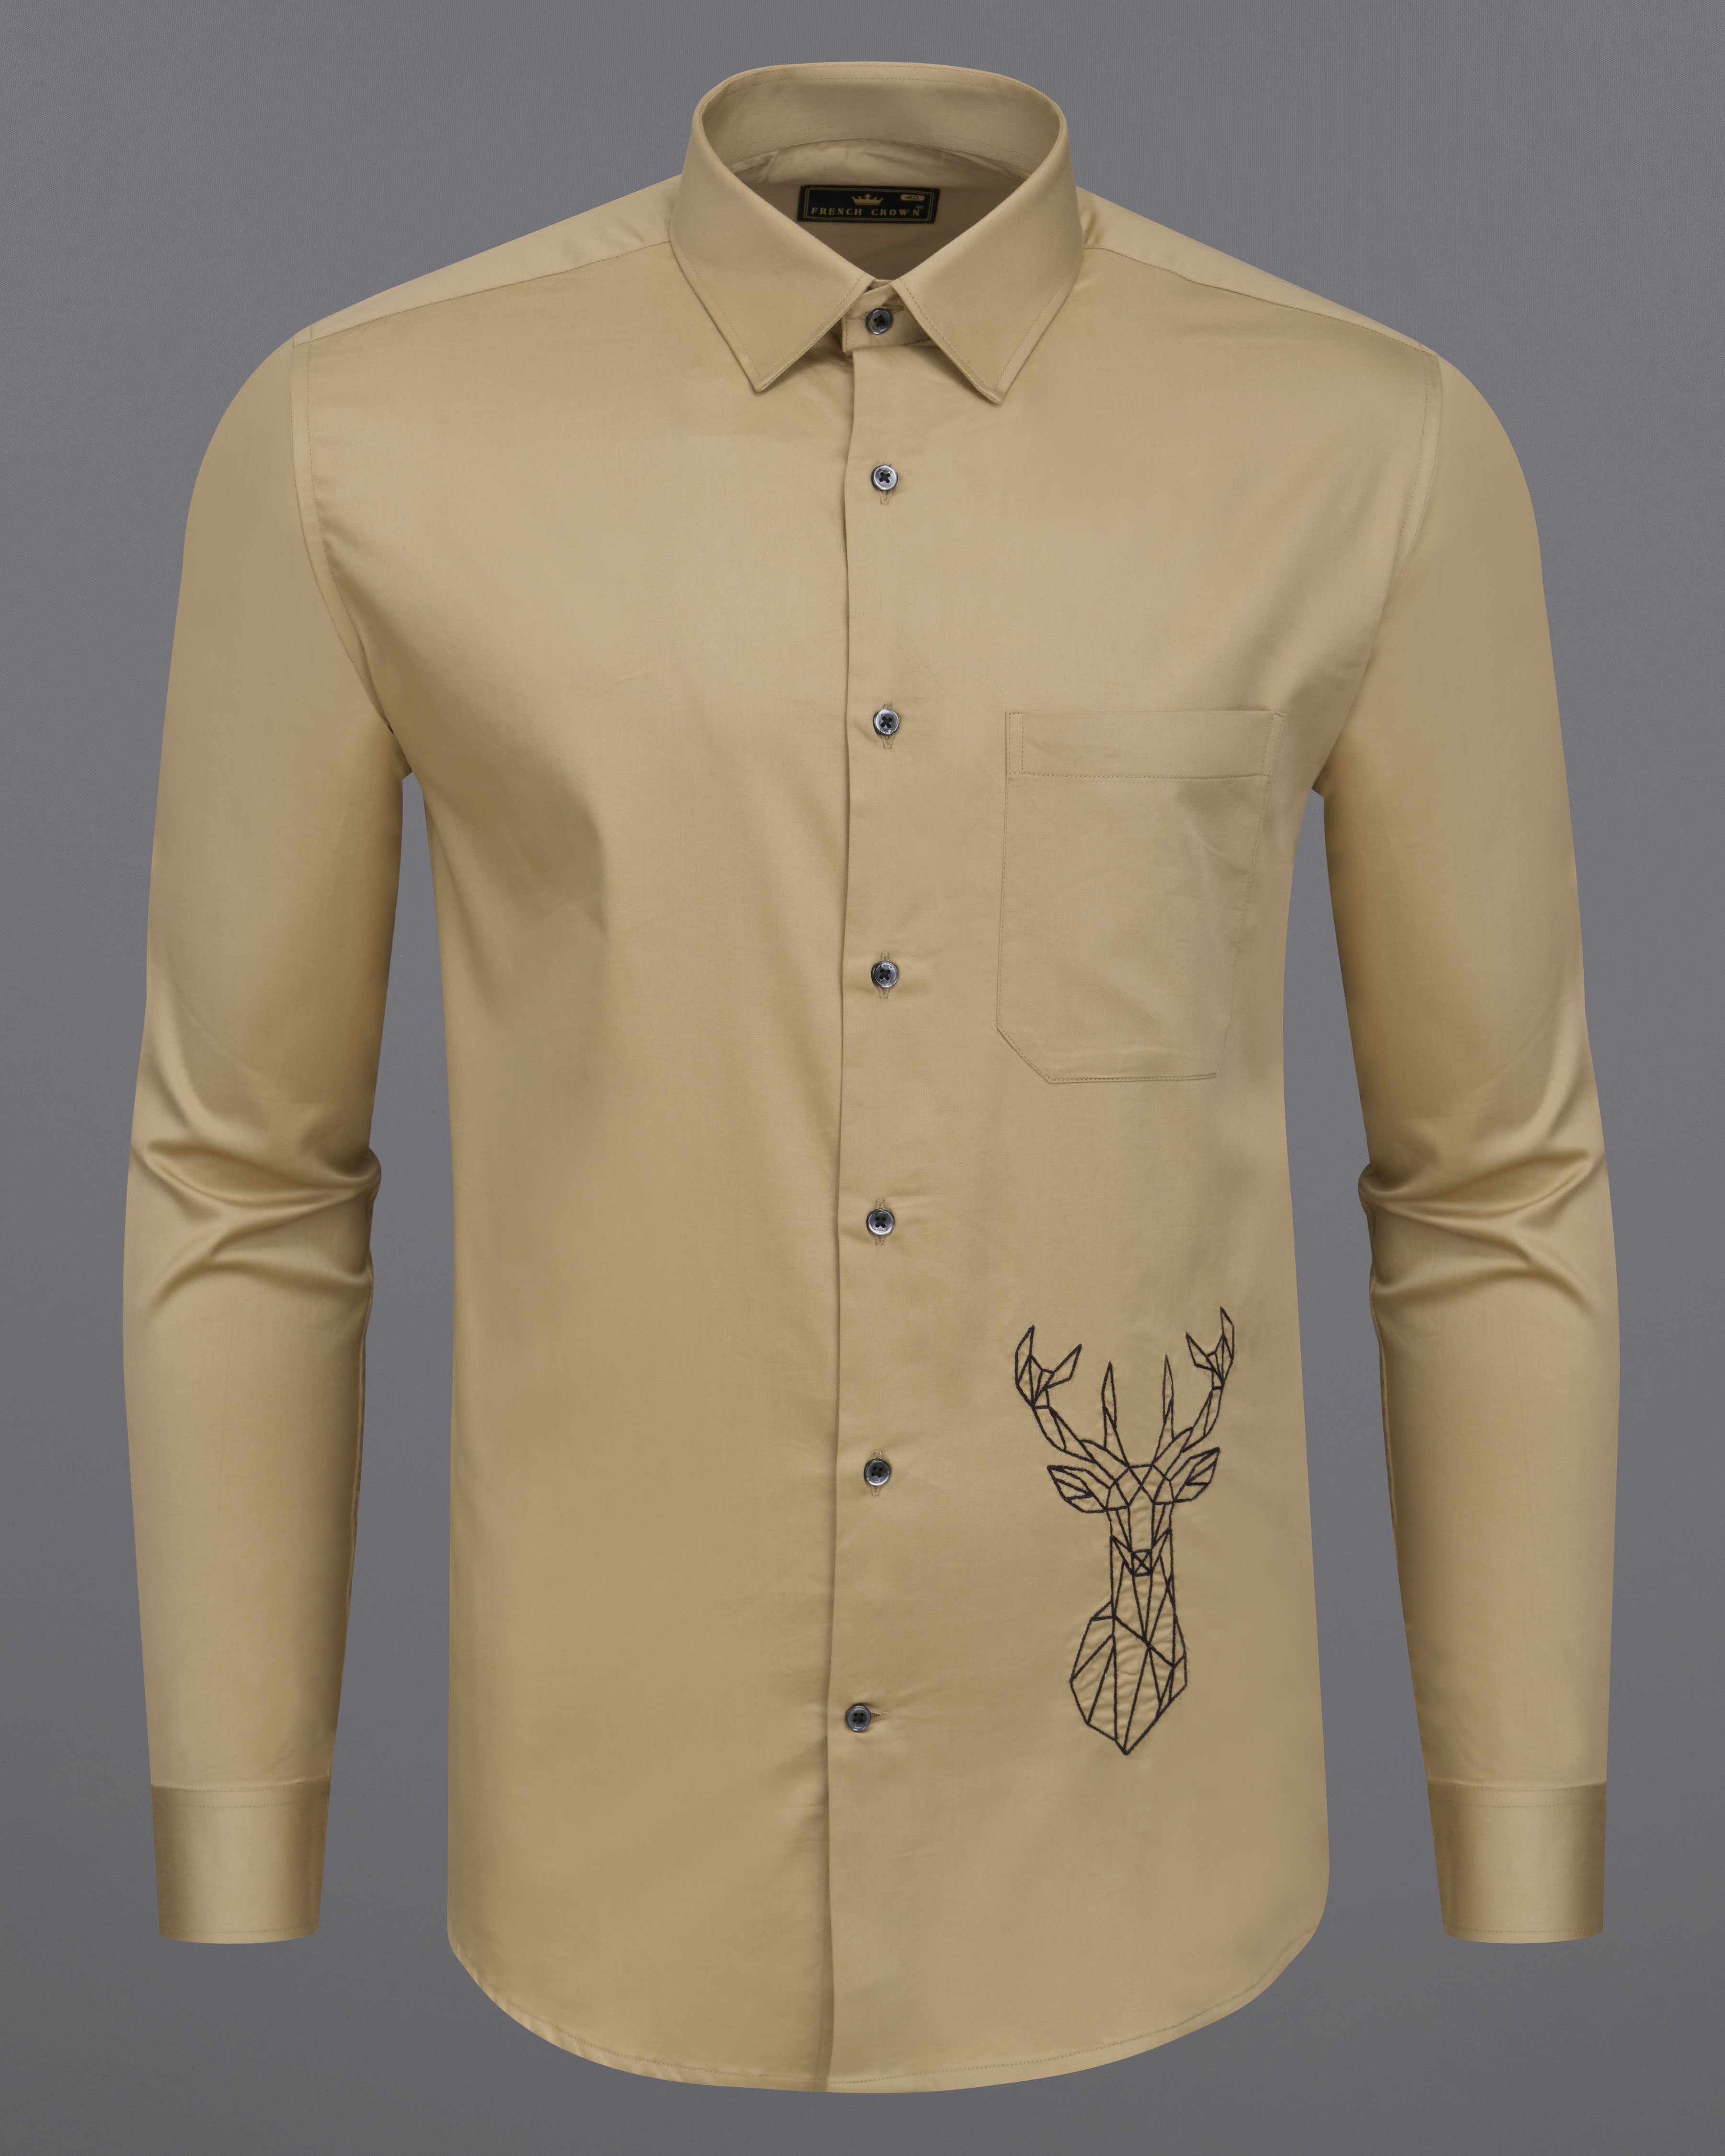 Bronco Brown with Deer Subtle Sheen Embroidered Super Soft Premium Cotton Designer Shirt 8733-BLK-E011-38, 8733-BLK-E011-H-38, 8733-BLK-E011-39, 8733-BLK-E011-H-39, 8733-BLK-E011-40, 8733-BLK-E011-H-40, 8733-BLK-E011-42, 8733-BLK-E011-H-42, 8733-BLK-E011-44, 8733-BLK-E011-H-44, 8733-BLK-E011-46, 8733-BLK-E011-H-46, 8733-BLK-E011-48, 8733-BLK-E011-H-48, 8733-BLK-E011-50, 8733-BLK-E011-H-50, 8733-BLK-E011-52, 8733-BLK-E011-H-52